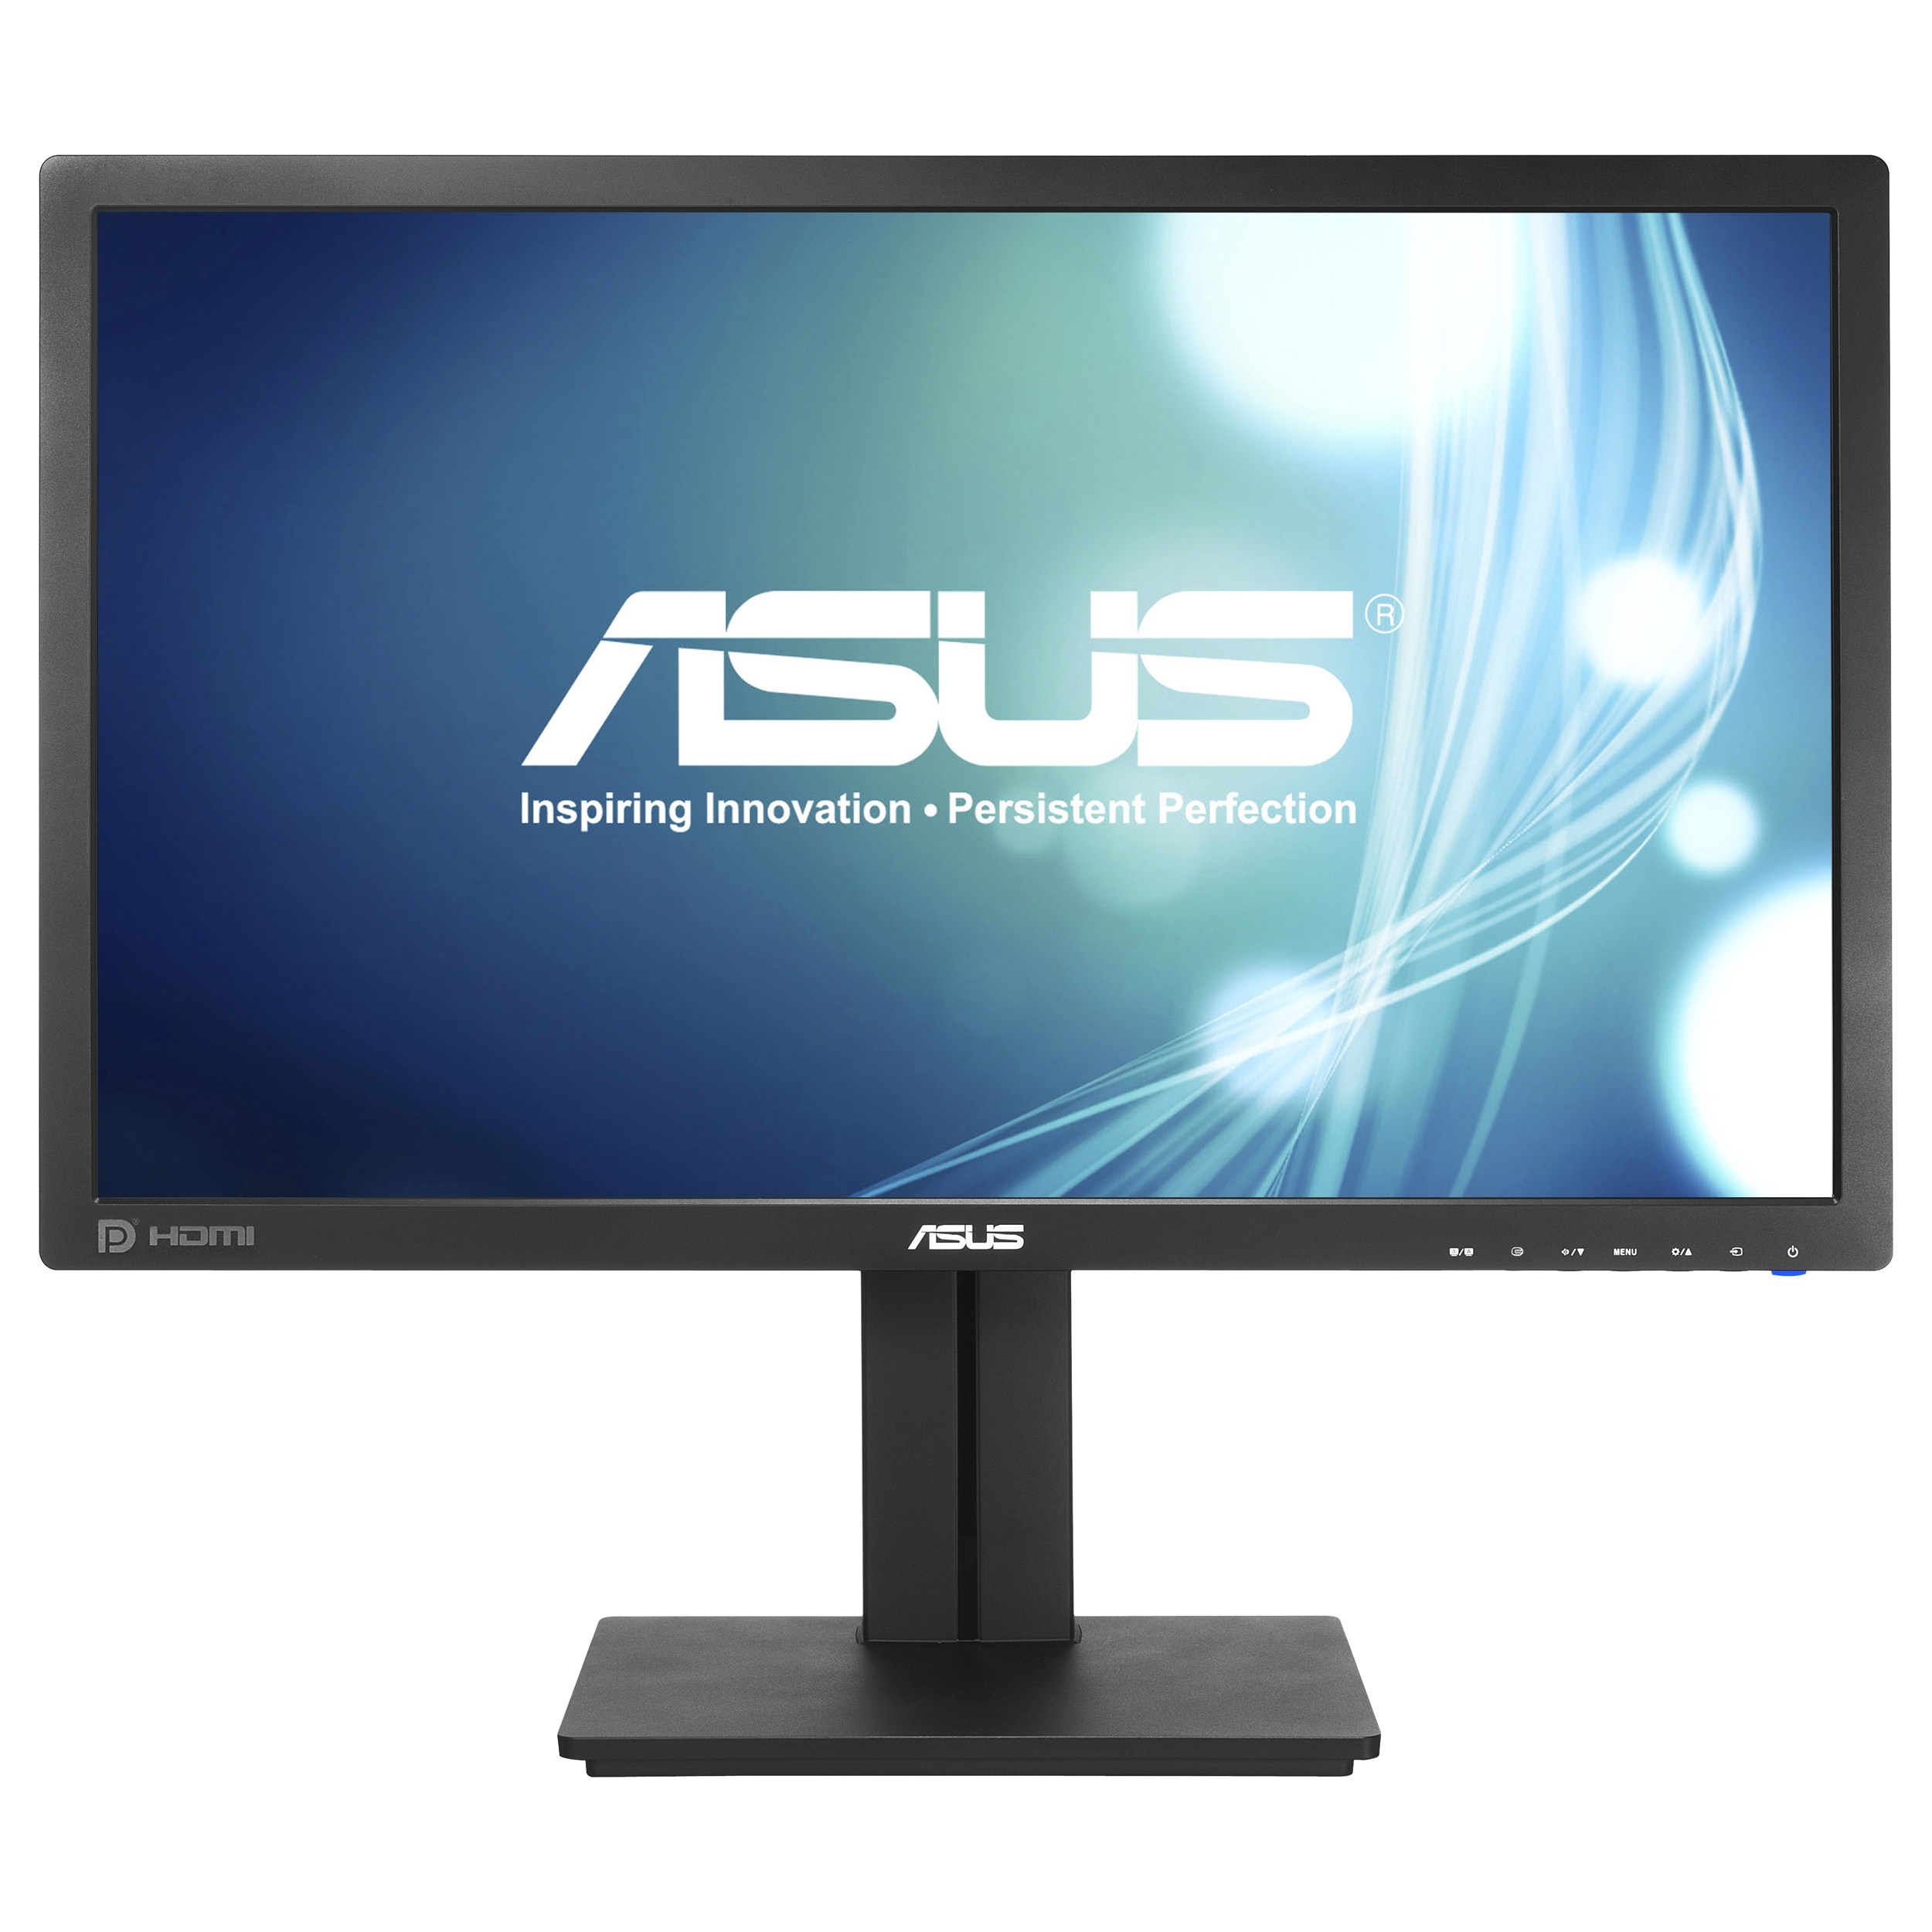 ASUS 27" 1440P Eye Care Monitor (PB278Q), QHD (2560 x 1440), IPS, DisplayPort, HDMI, DVI - image 1 of 5